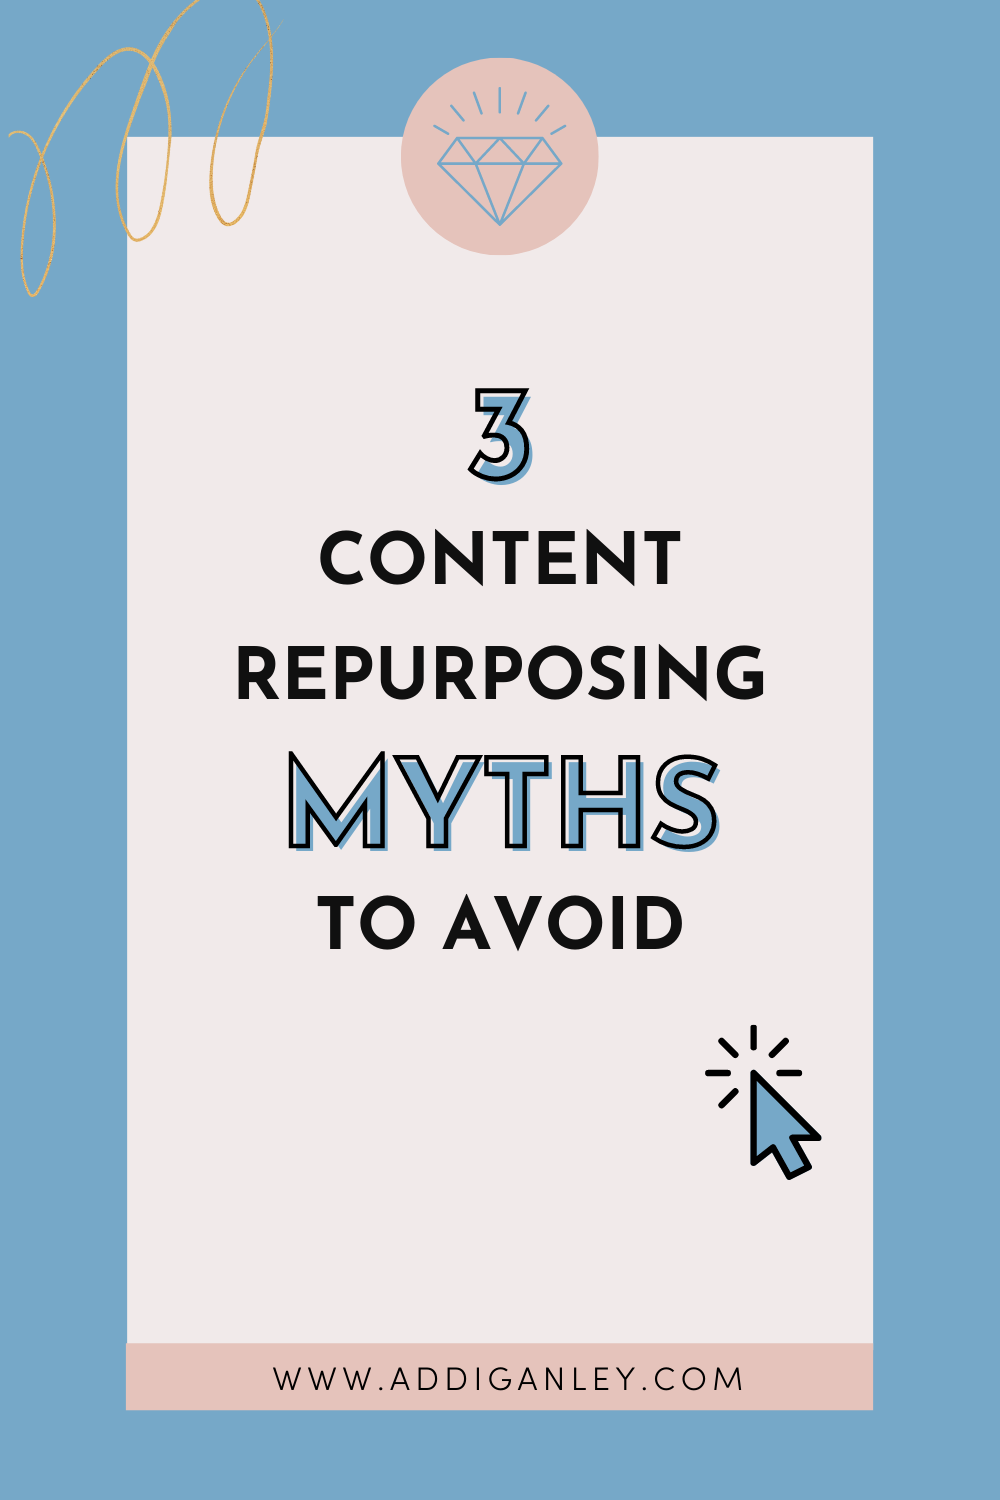 Content material Repurposing Myths